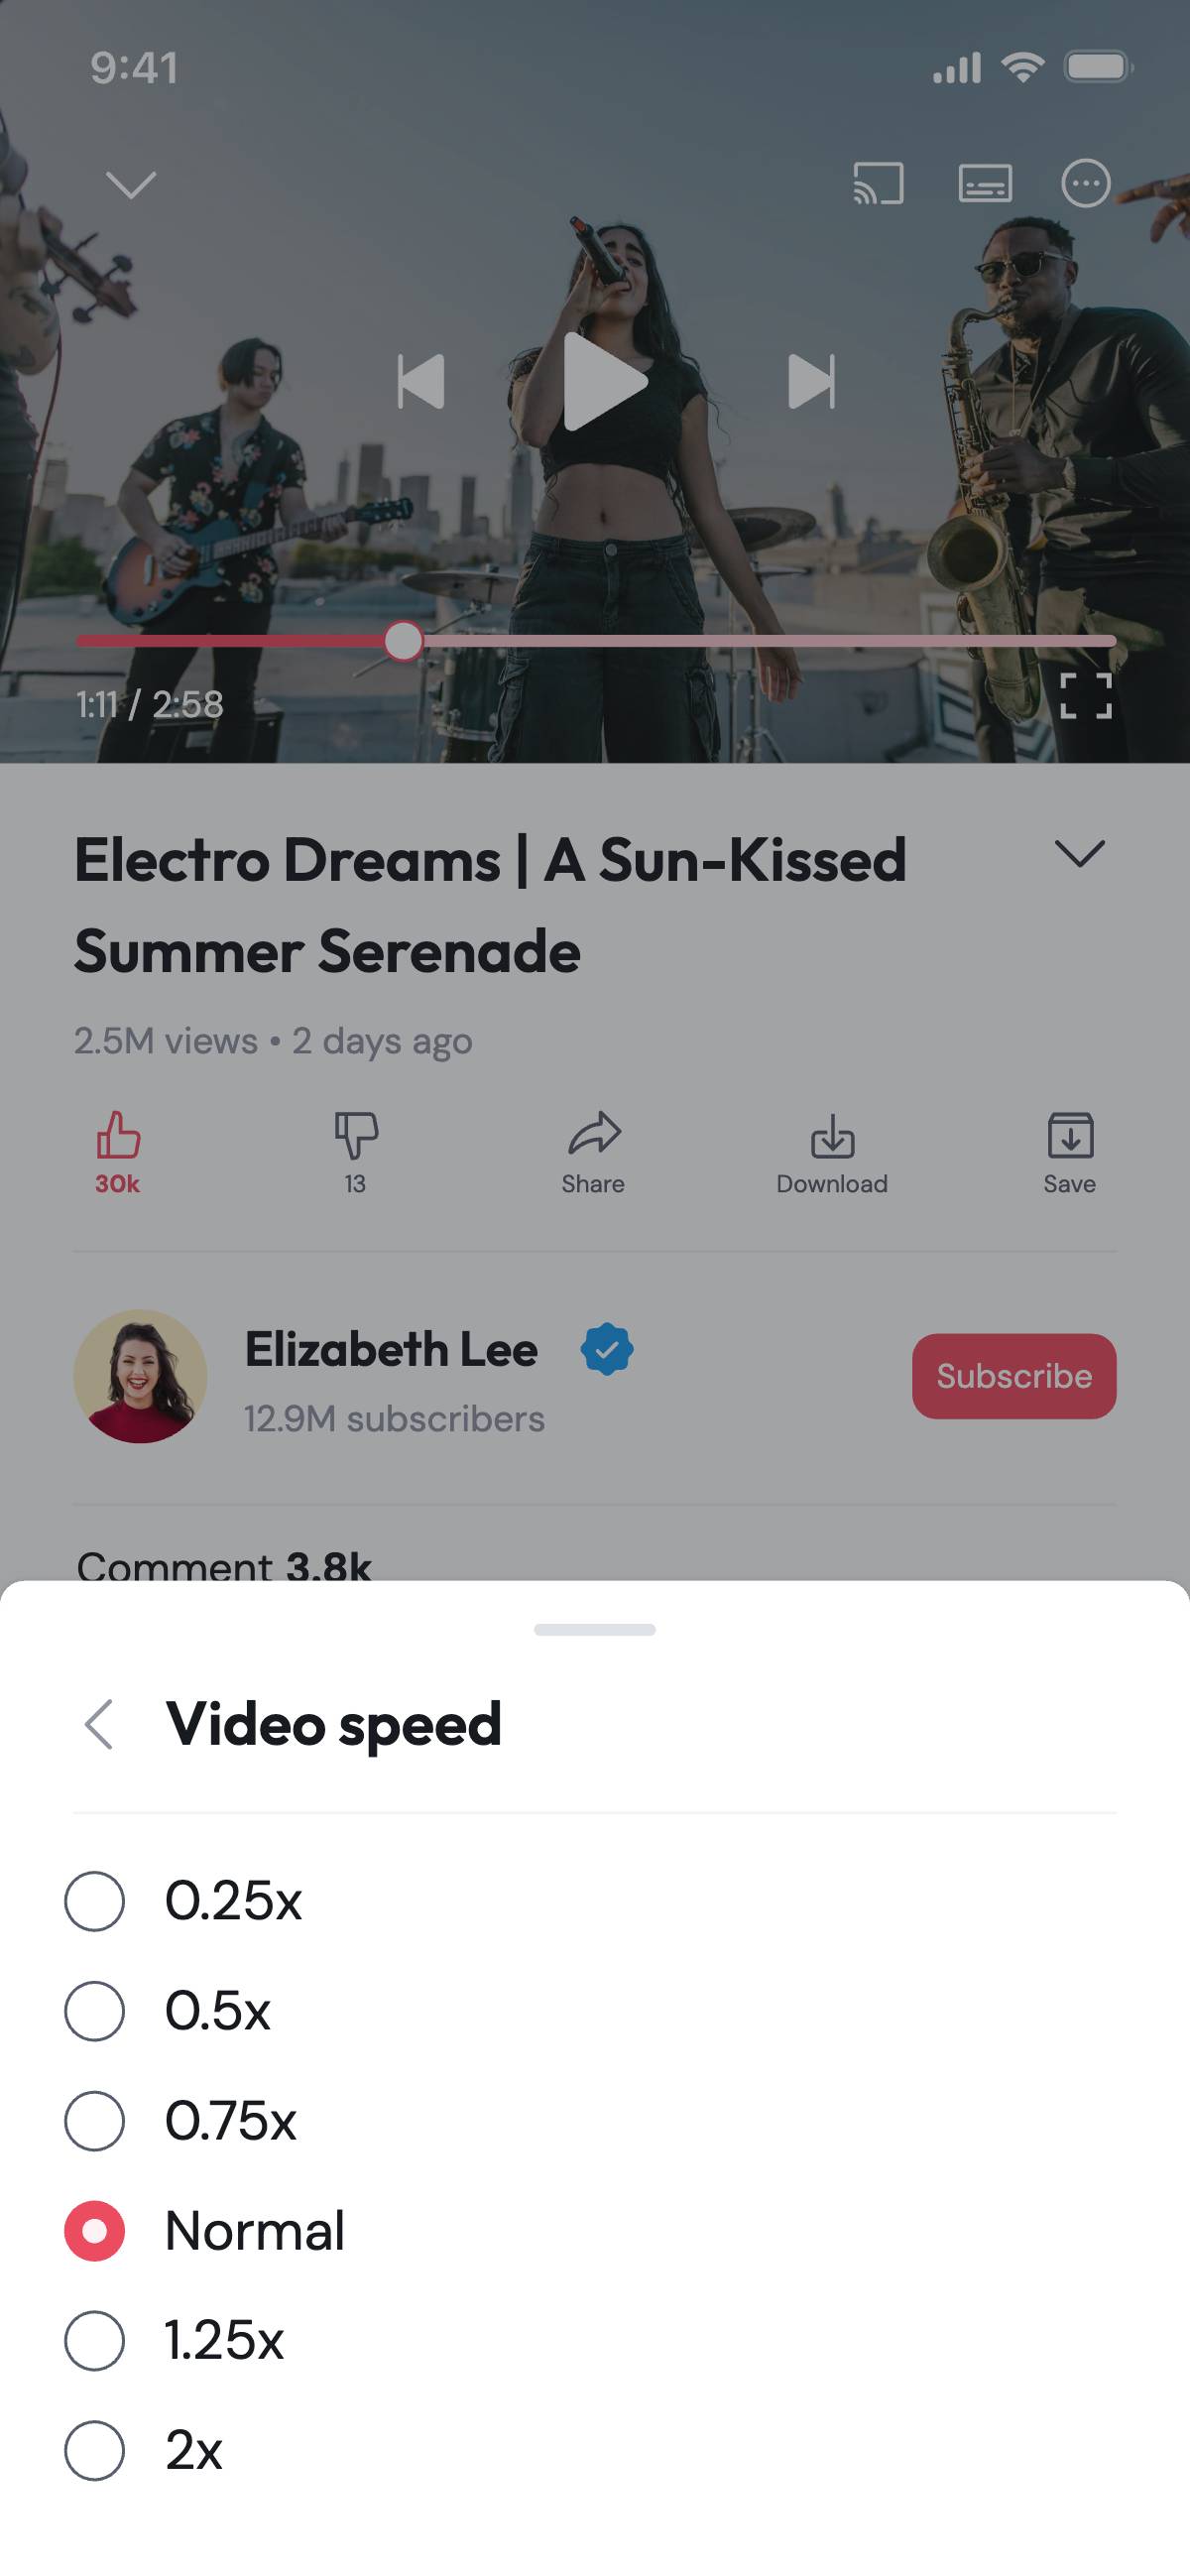 Video settings - Speed